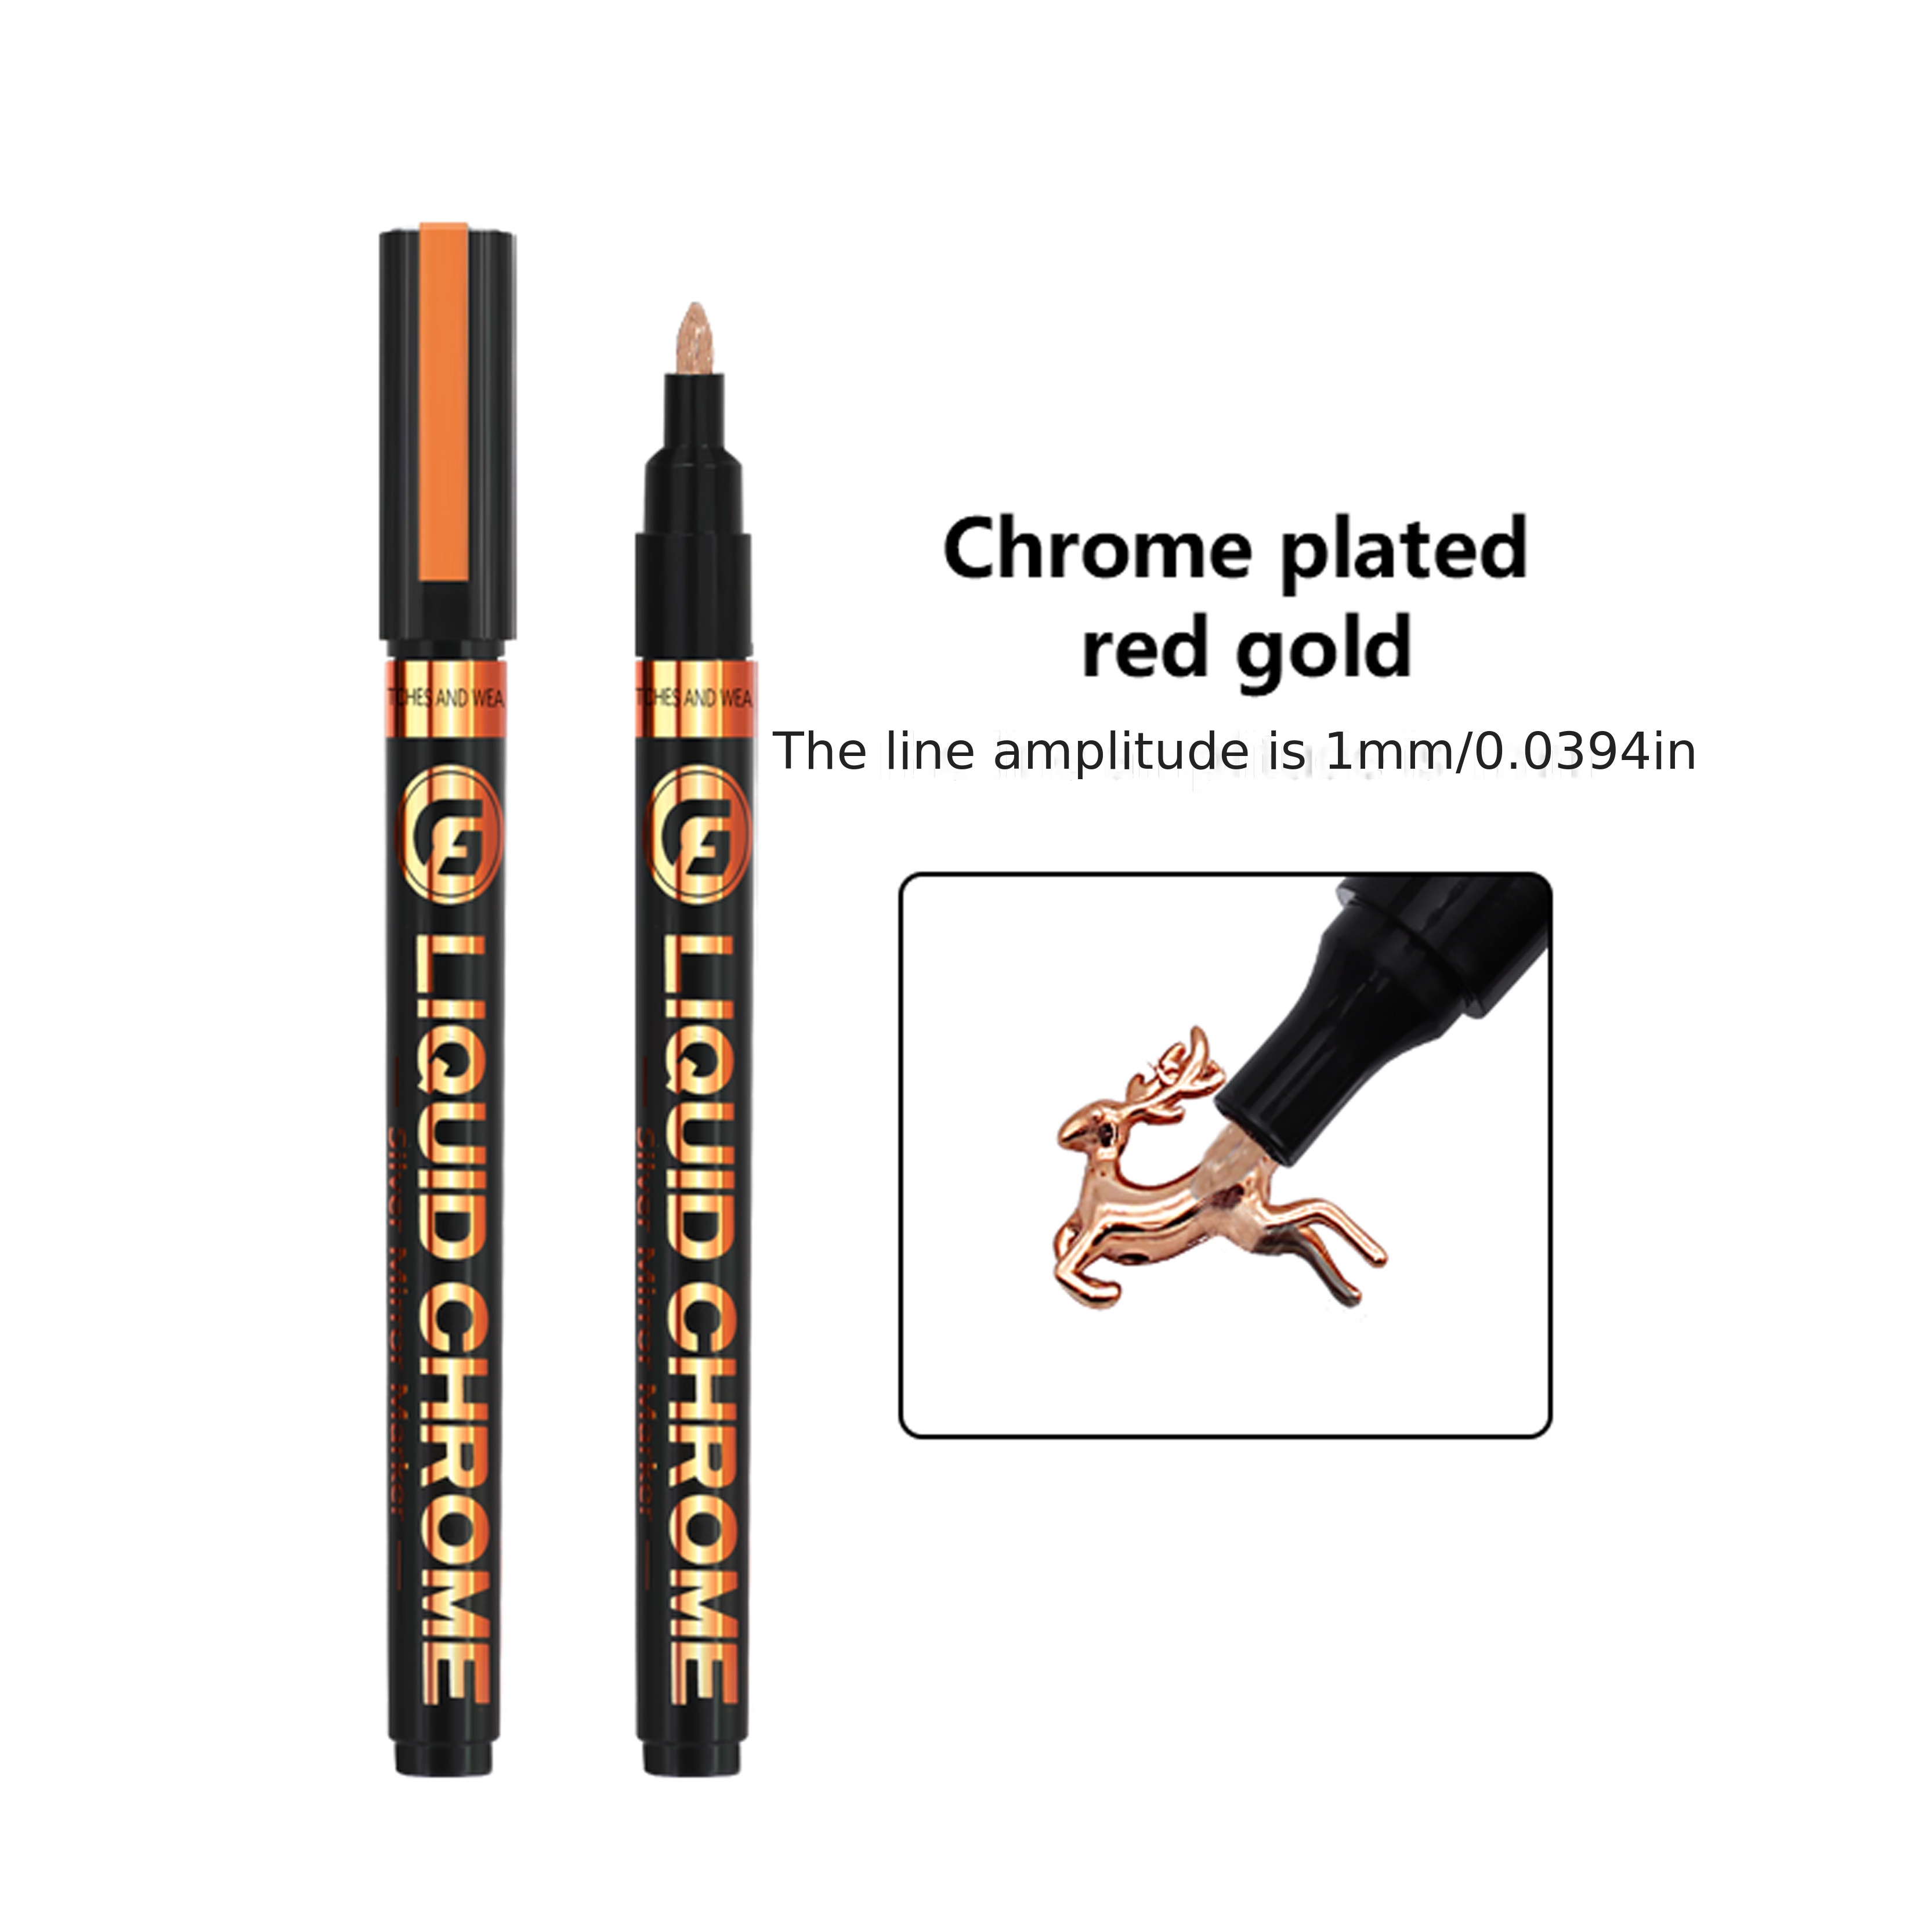 4 Colors Liquid Mirror Chrome Marker Pen Gold Red Gold Copper Gold